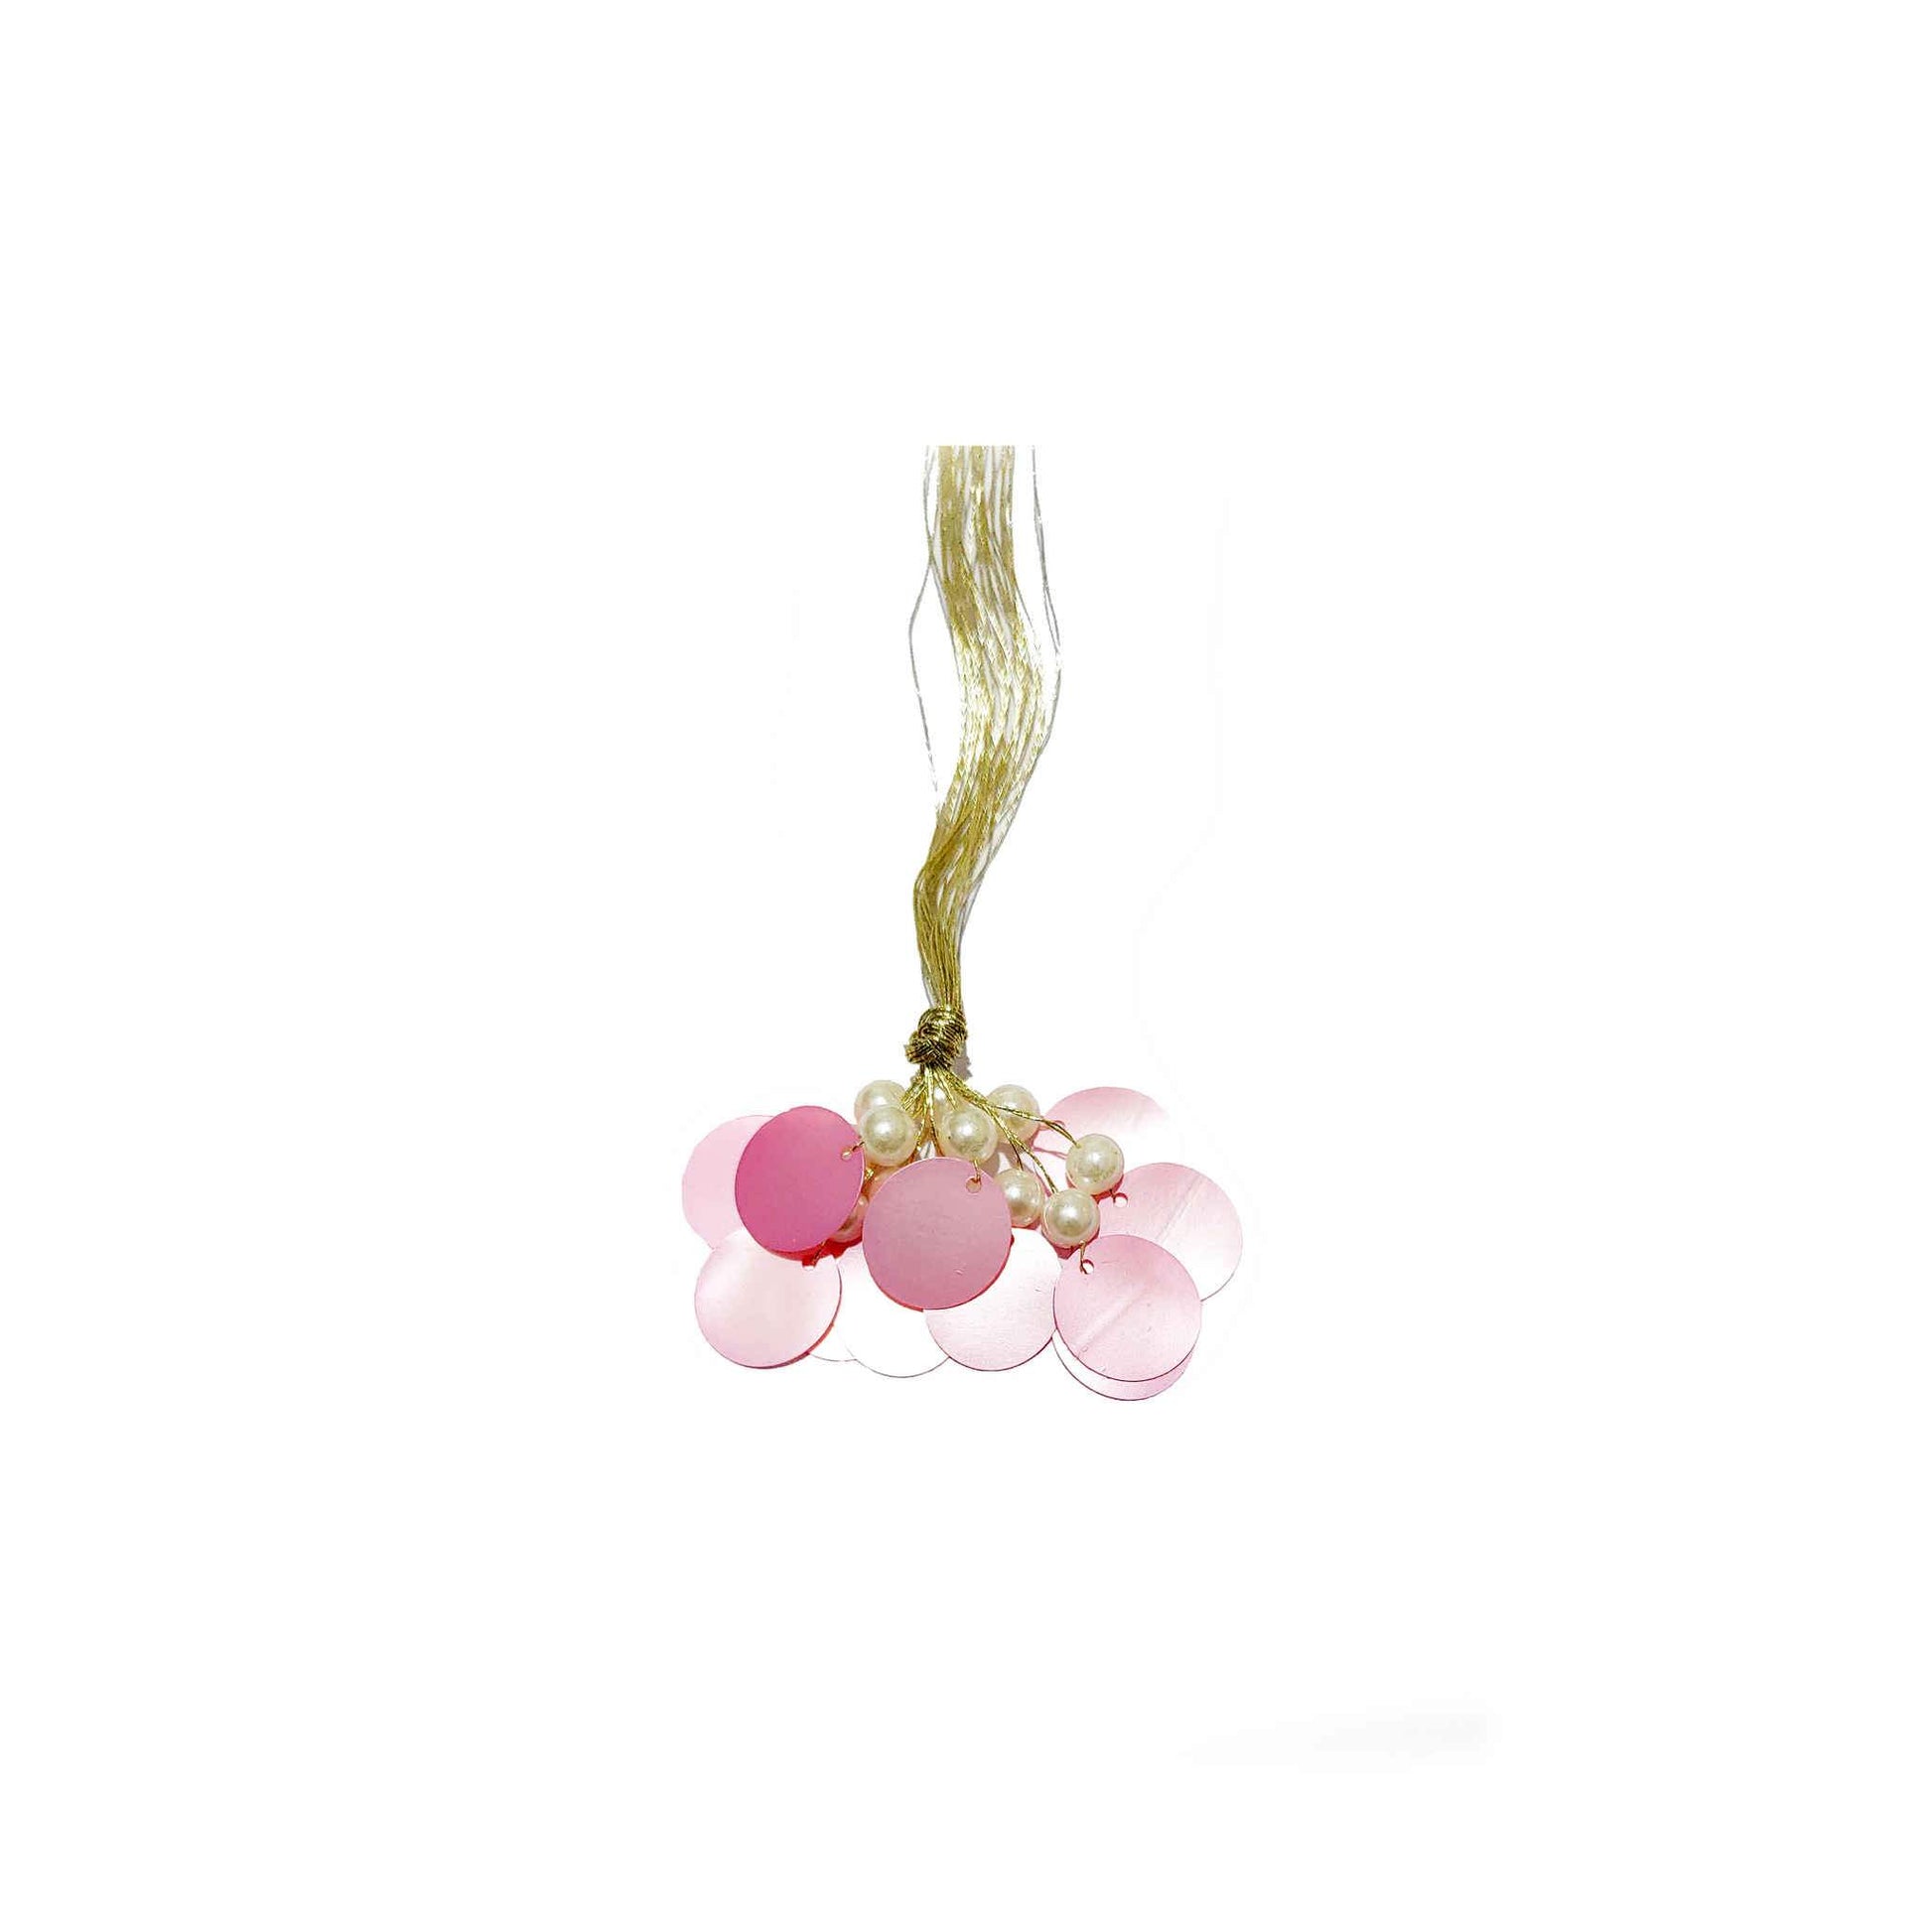 Indian Petals Handmade Sitara Thread Fringe Tassel for Craft, Jewelry or Dressing - Design 856